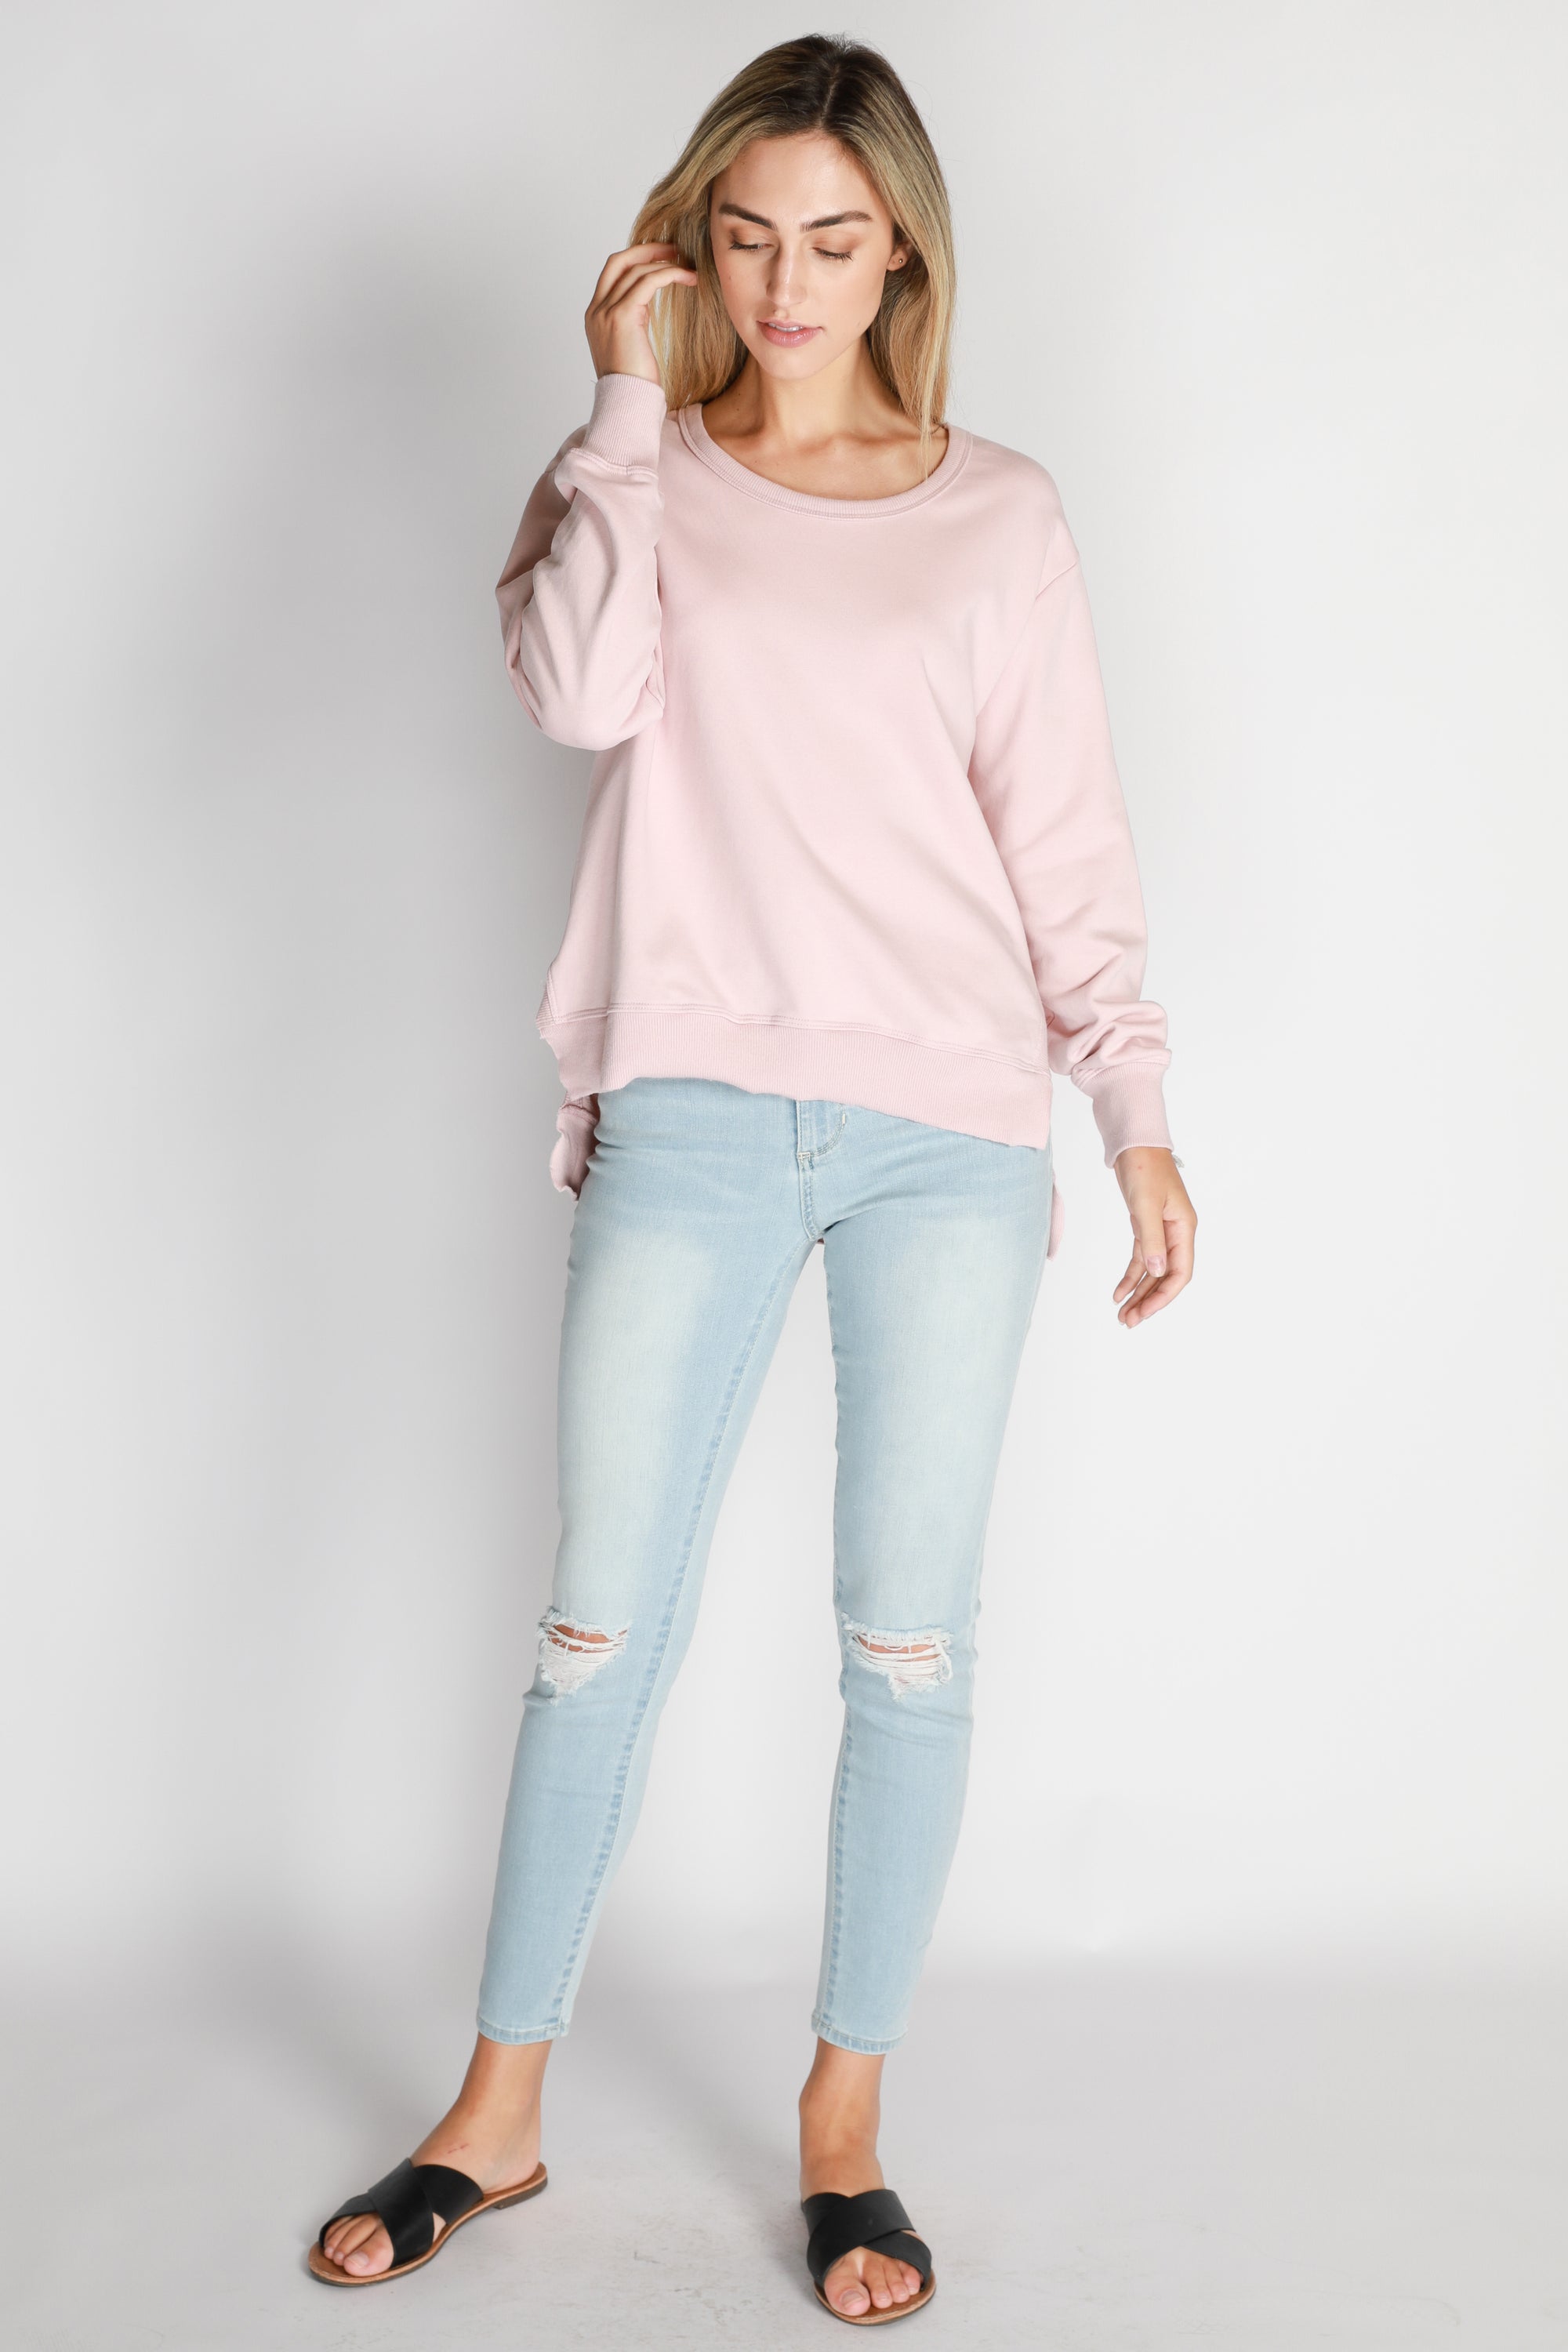 Ulverstone Sweater - Pink/Marshmallow